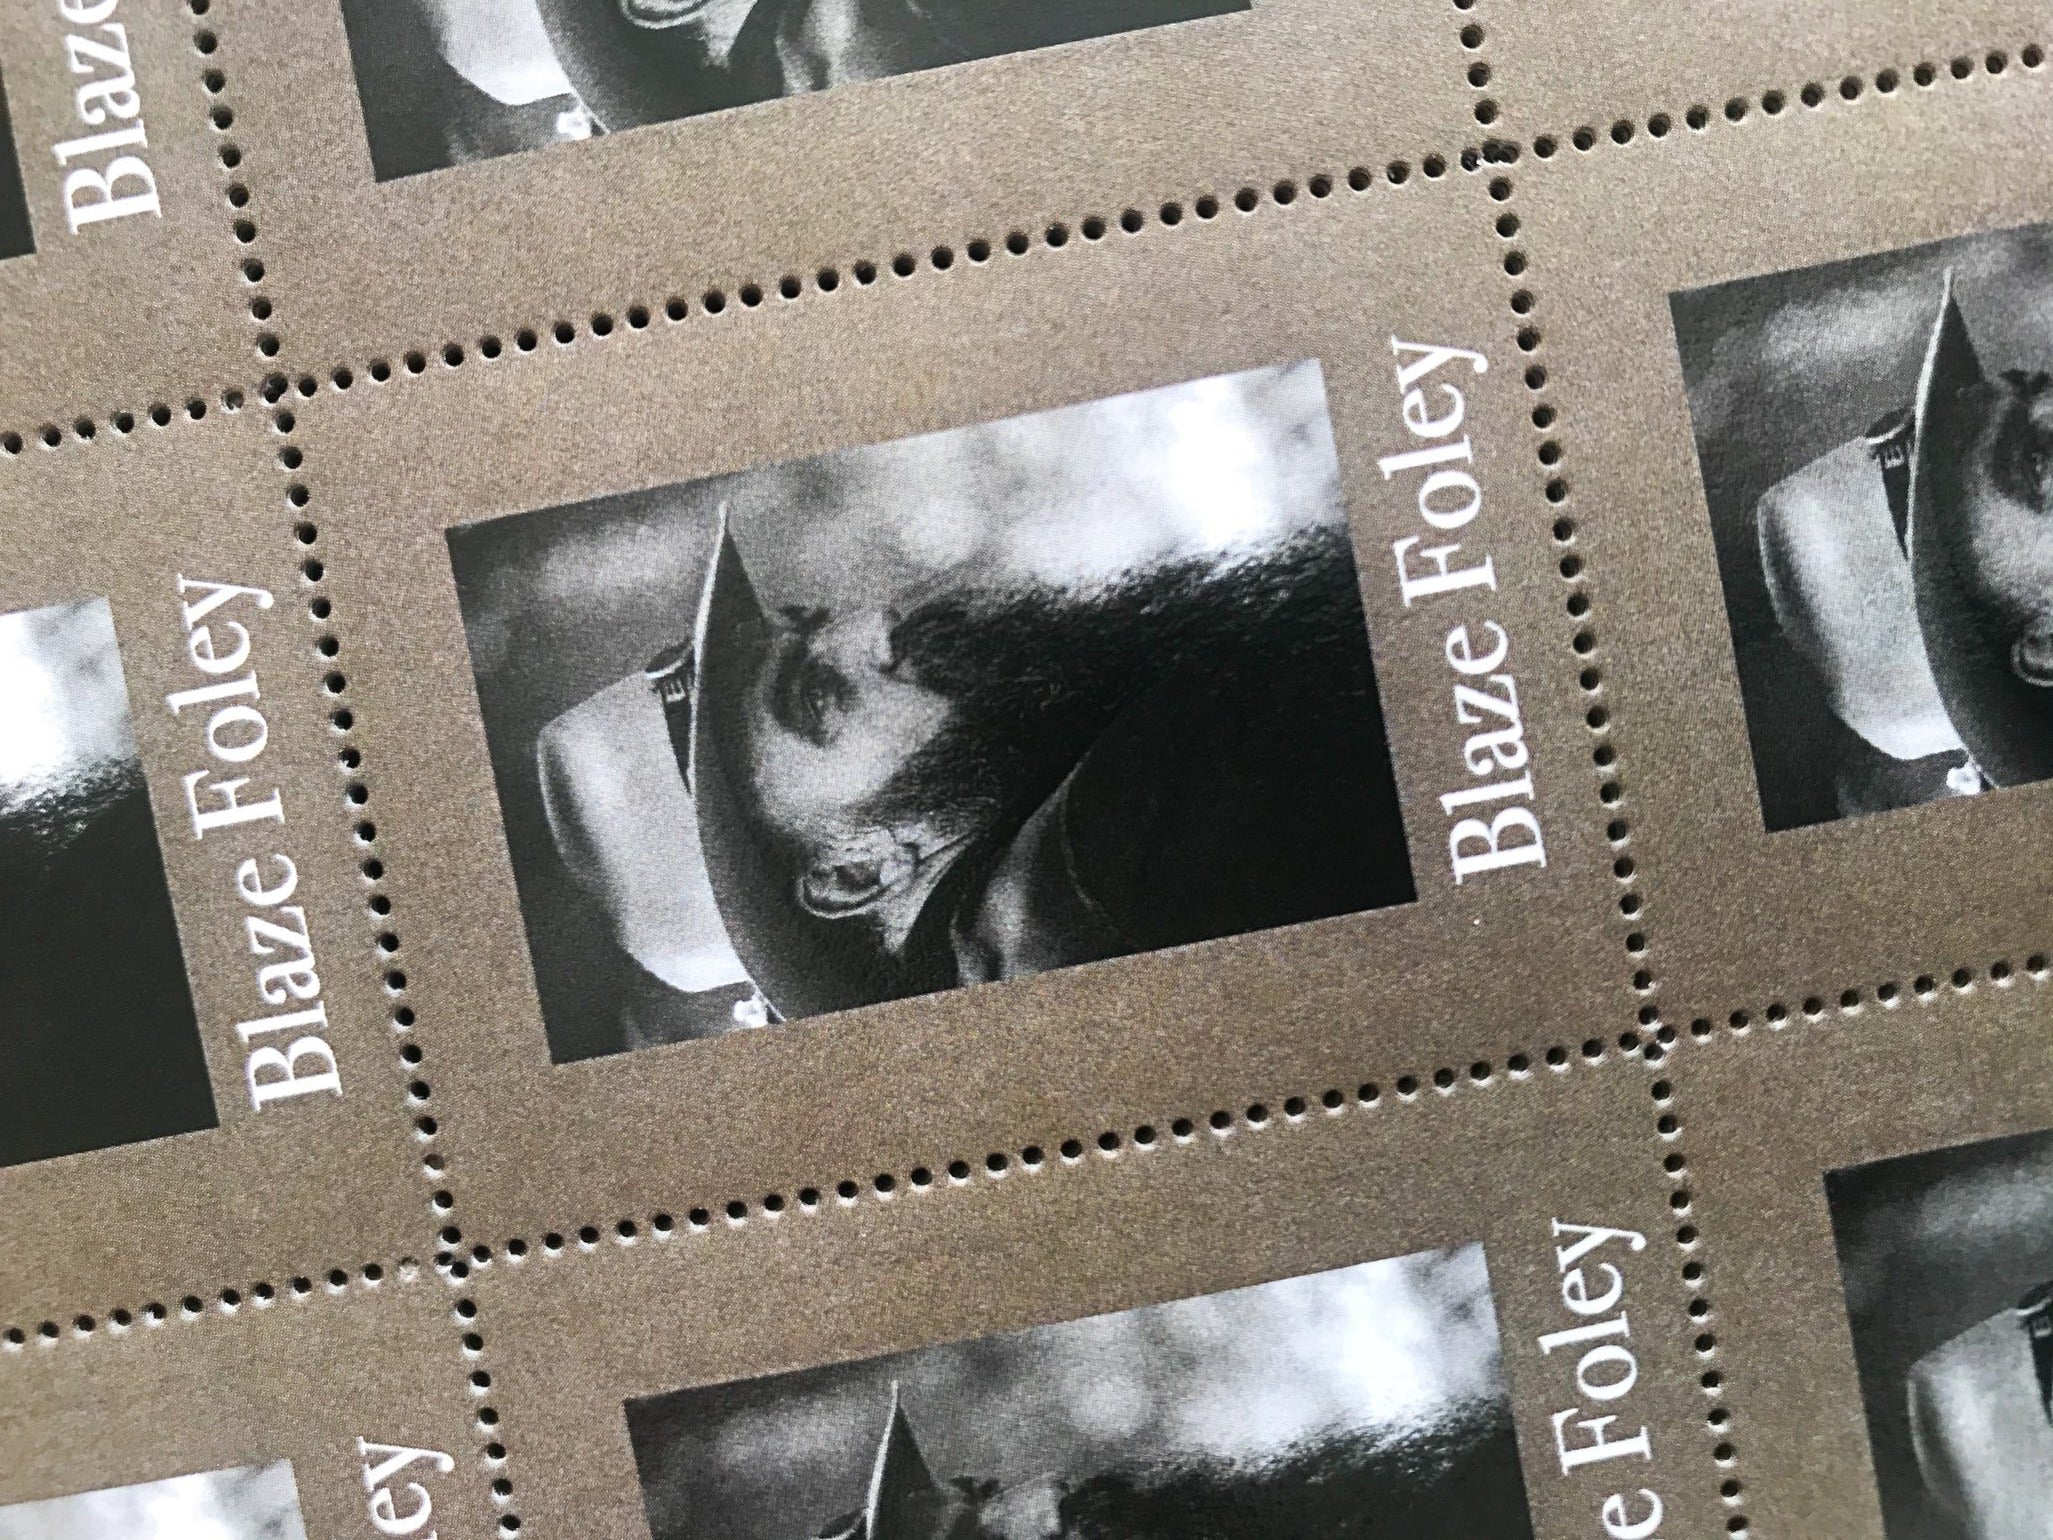 Blaze Foley Stamp Sheet